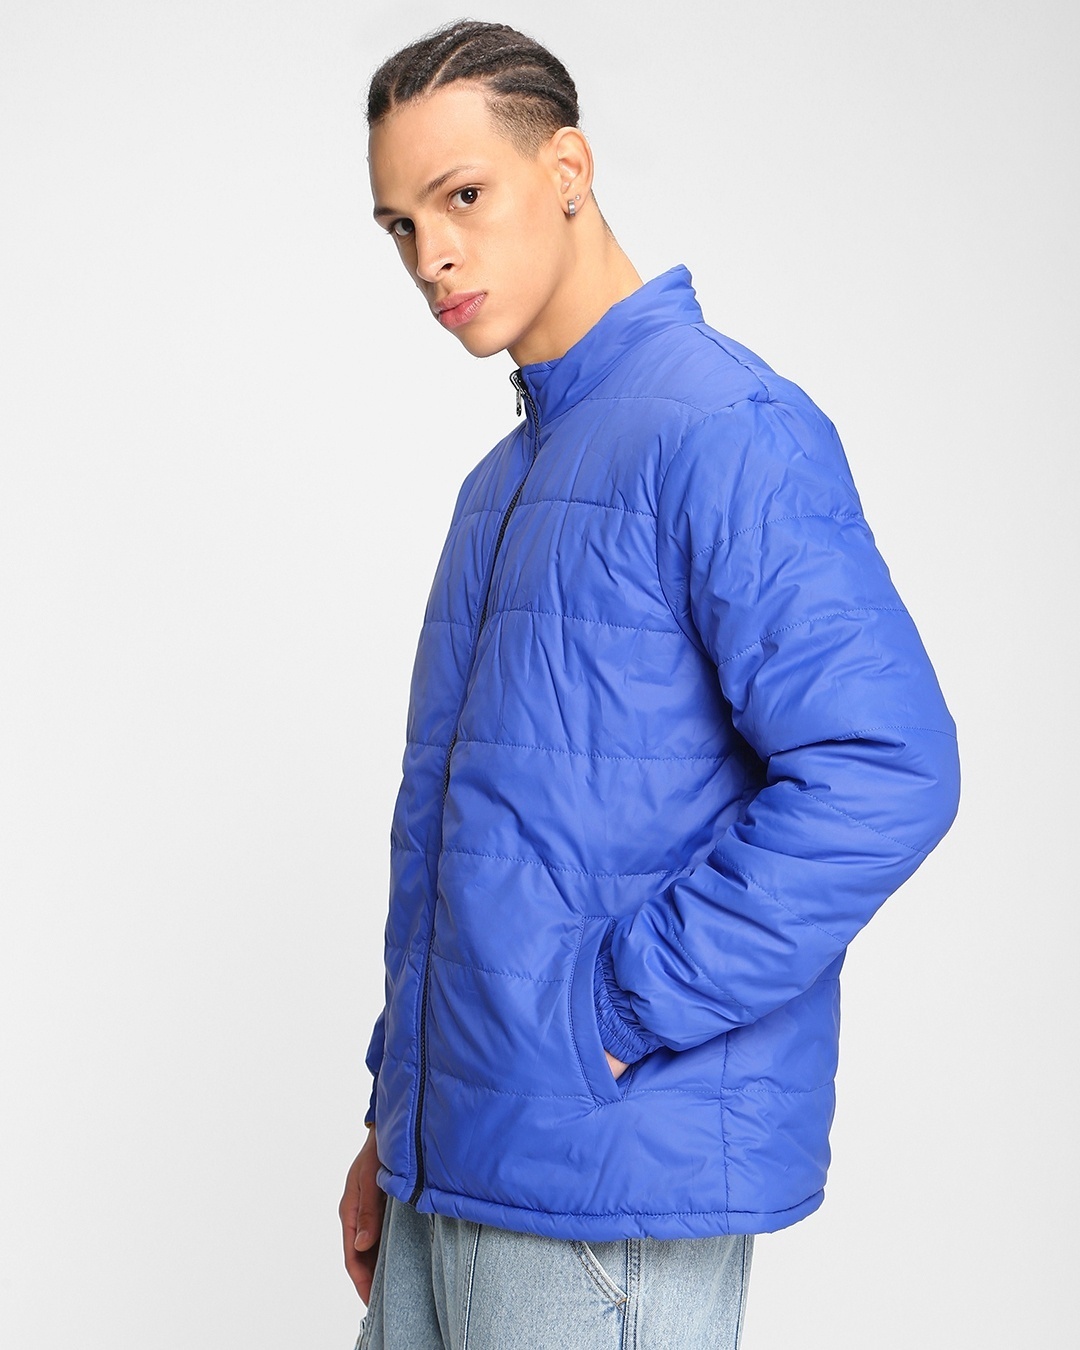 Buy Men's Blue & Yellow Reversible Puffer Jacket Online at Bewakoof